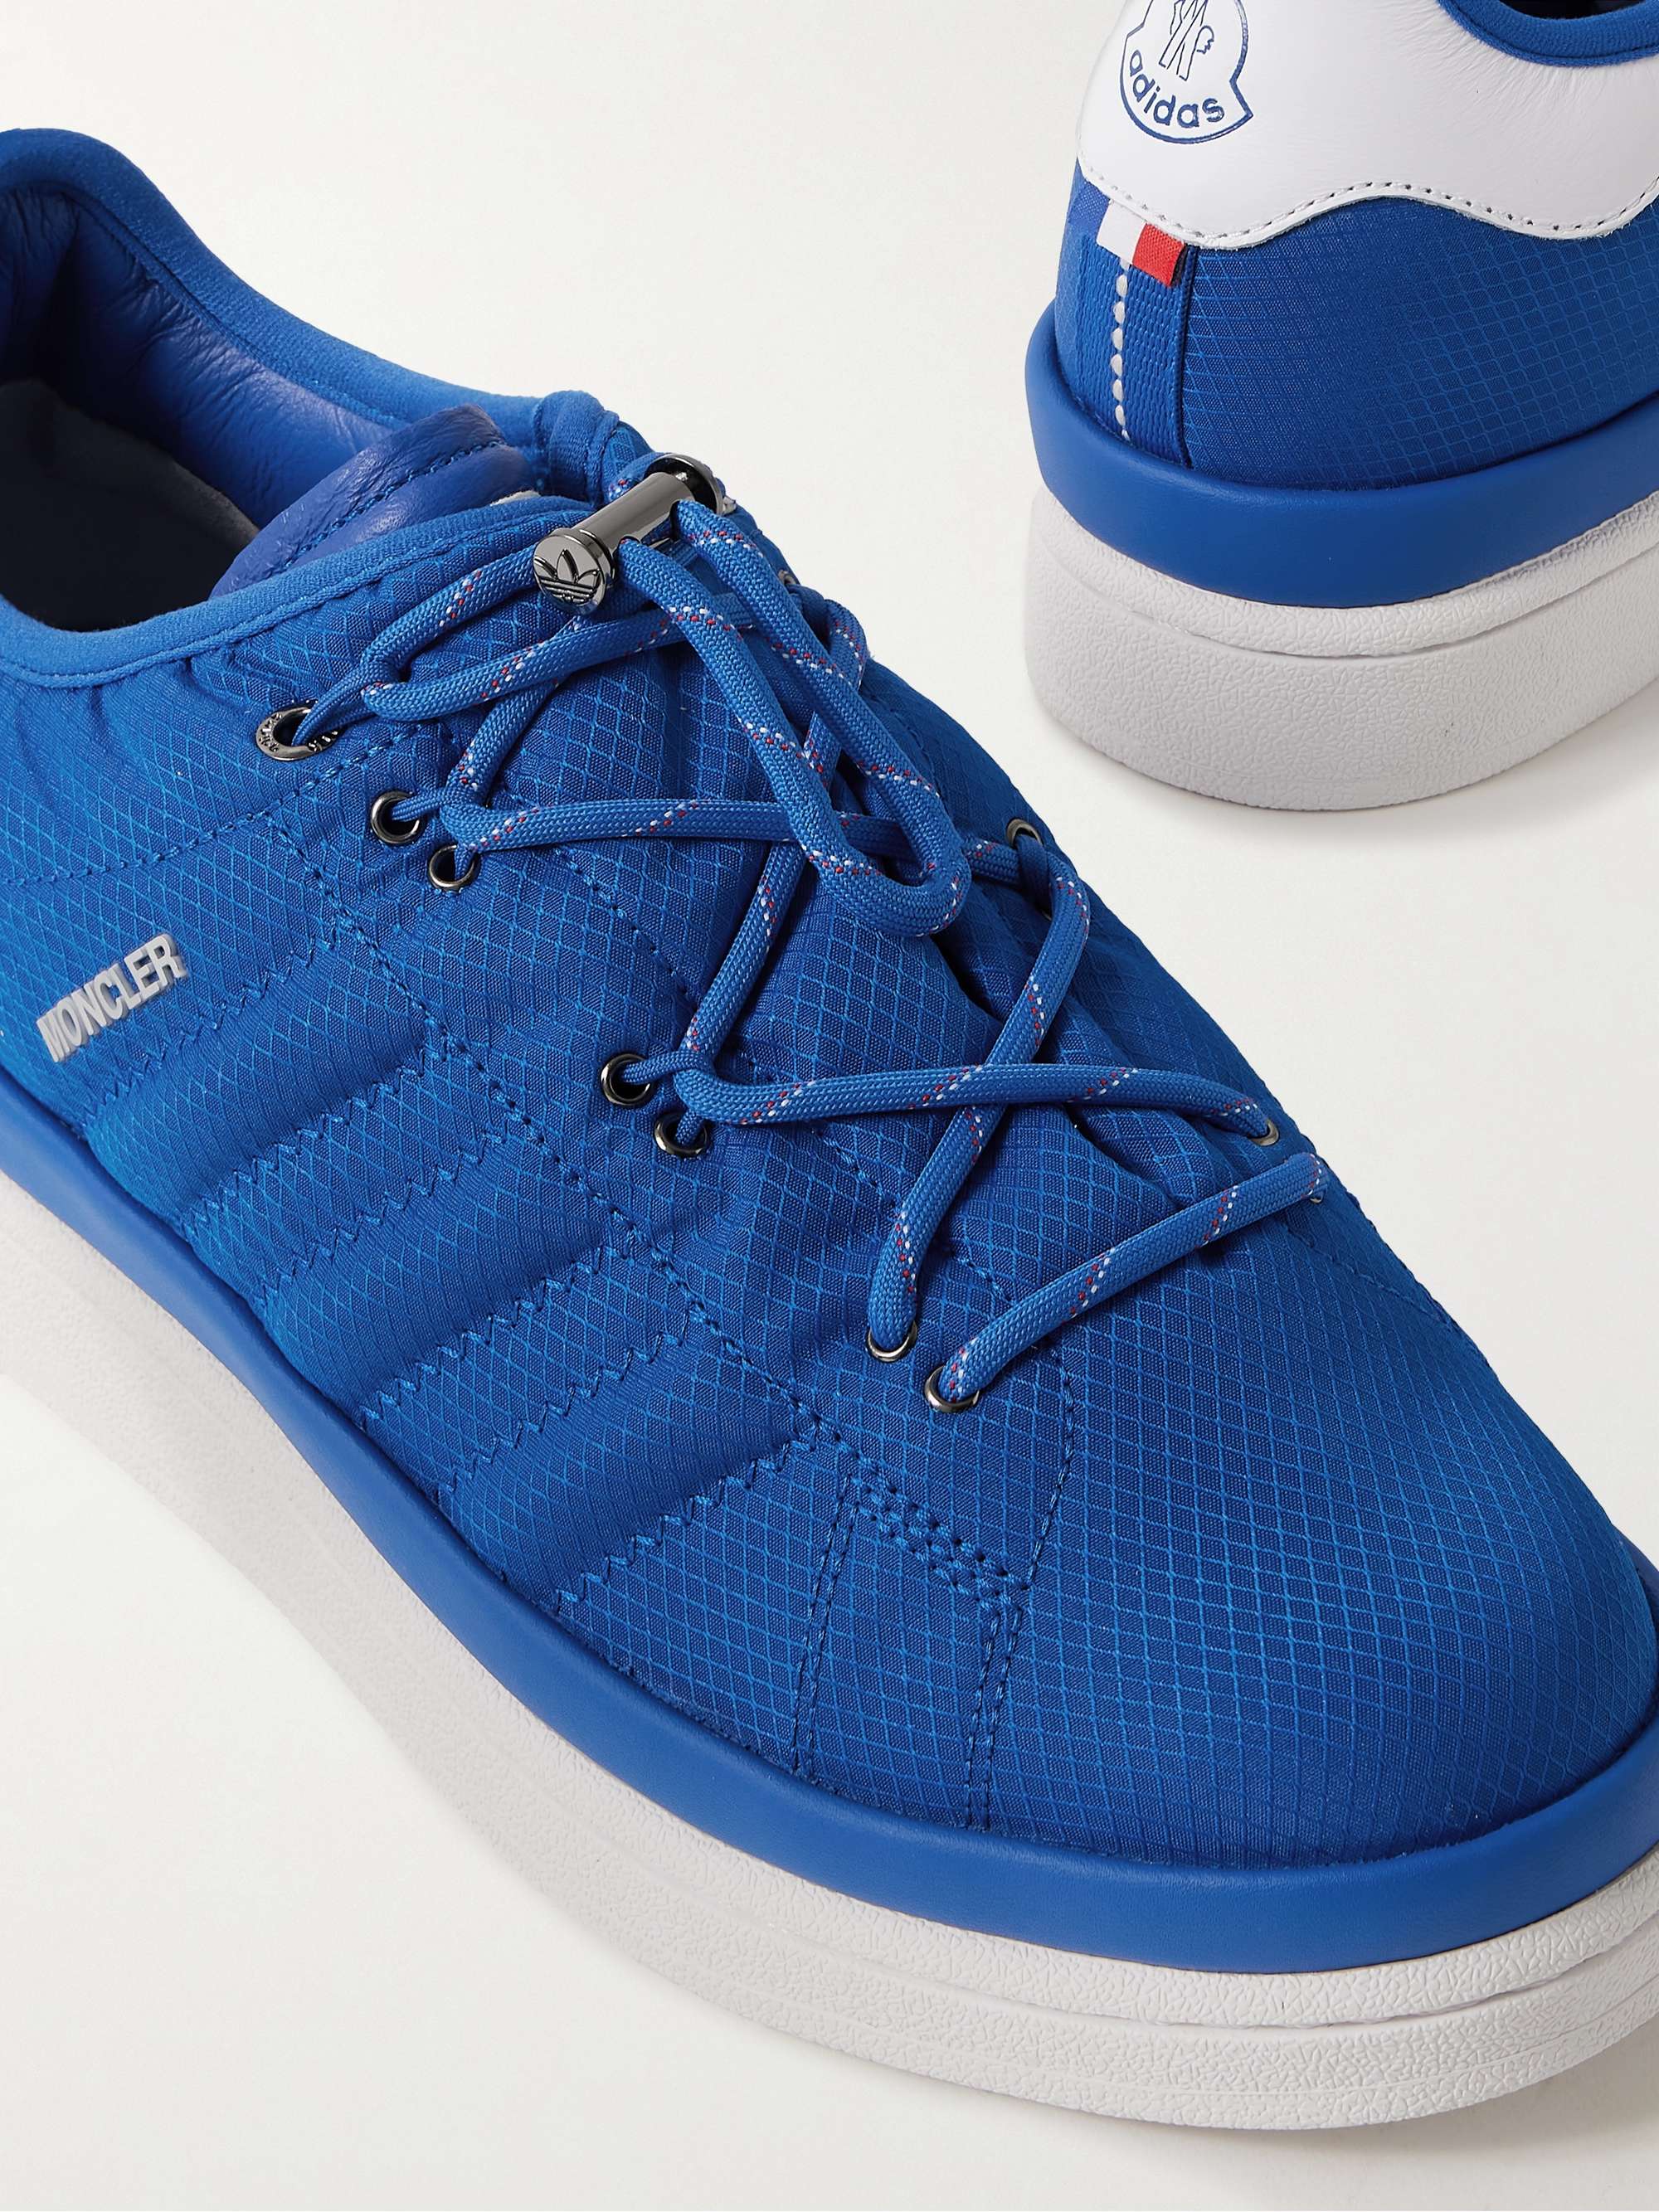 MONCLER GENIUS + adidas Originals Campus Leather-Trimmed Quilted GORE-TEX™  Sneakers for Men | MR PORTER